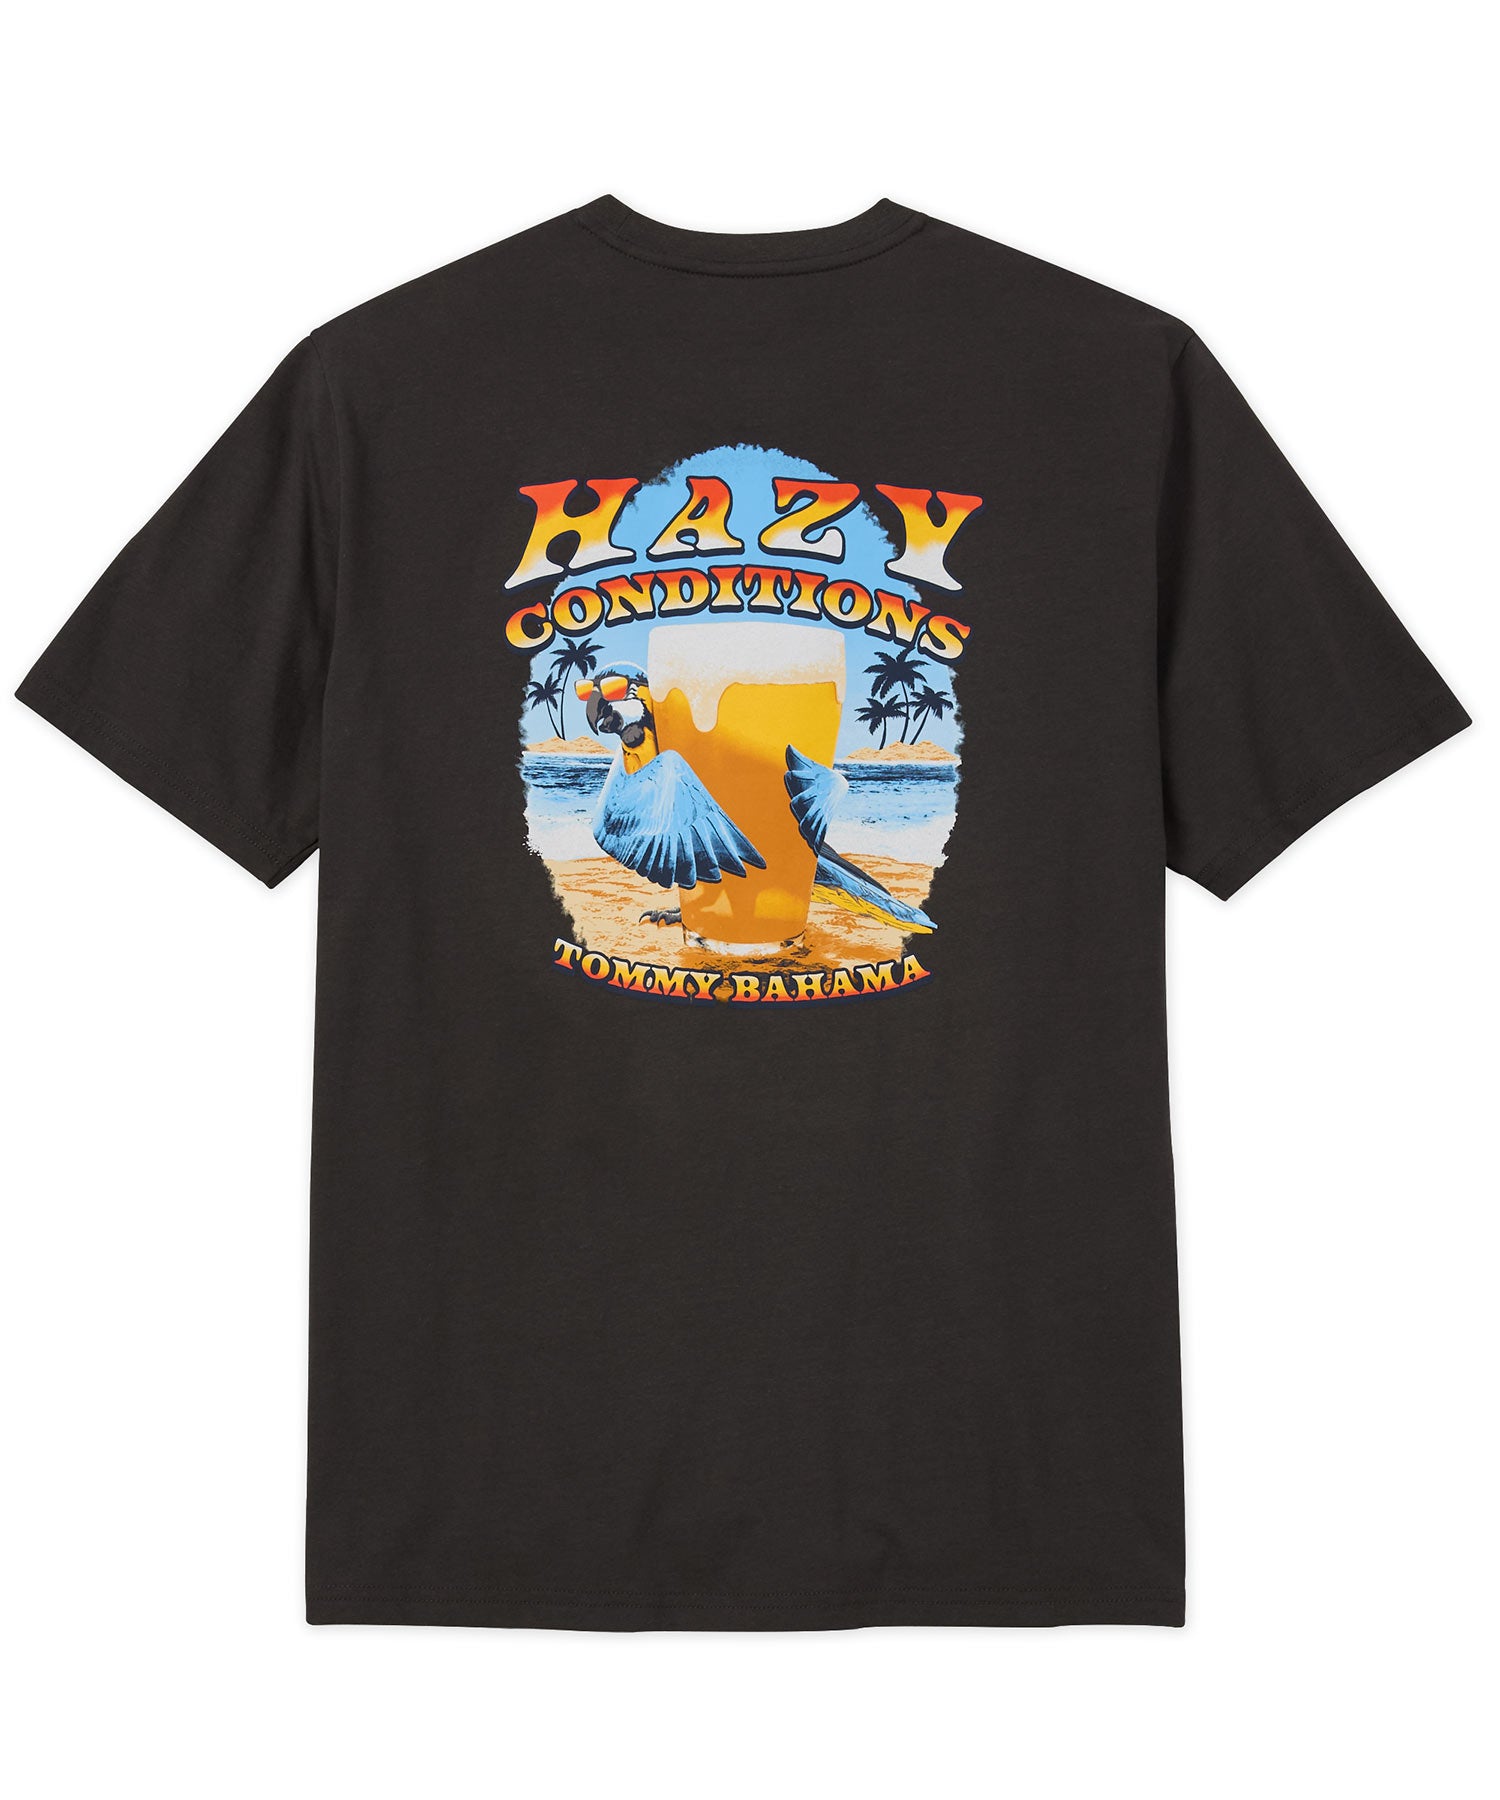 T-shirt Tommy Bahama Hazy Conditions, Men's Big & Tall